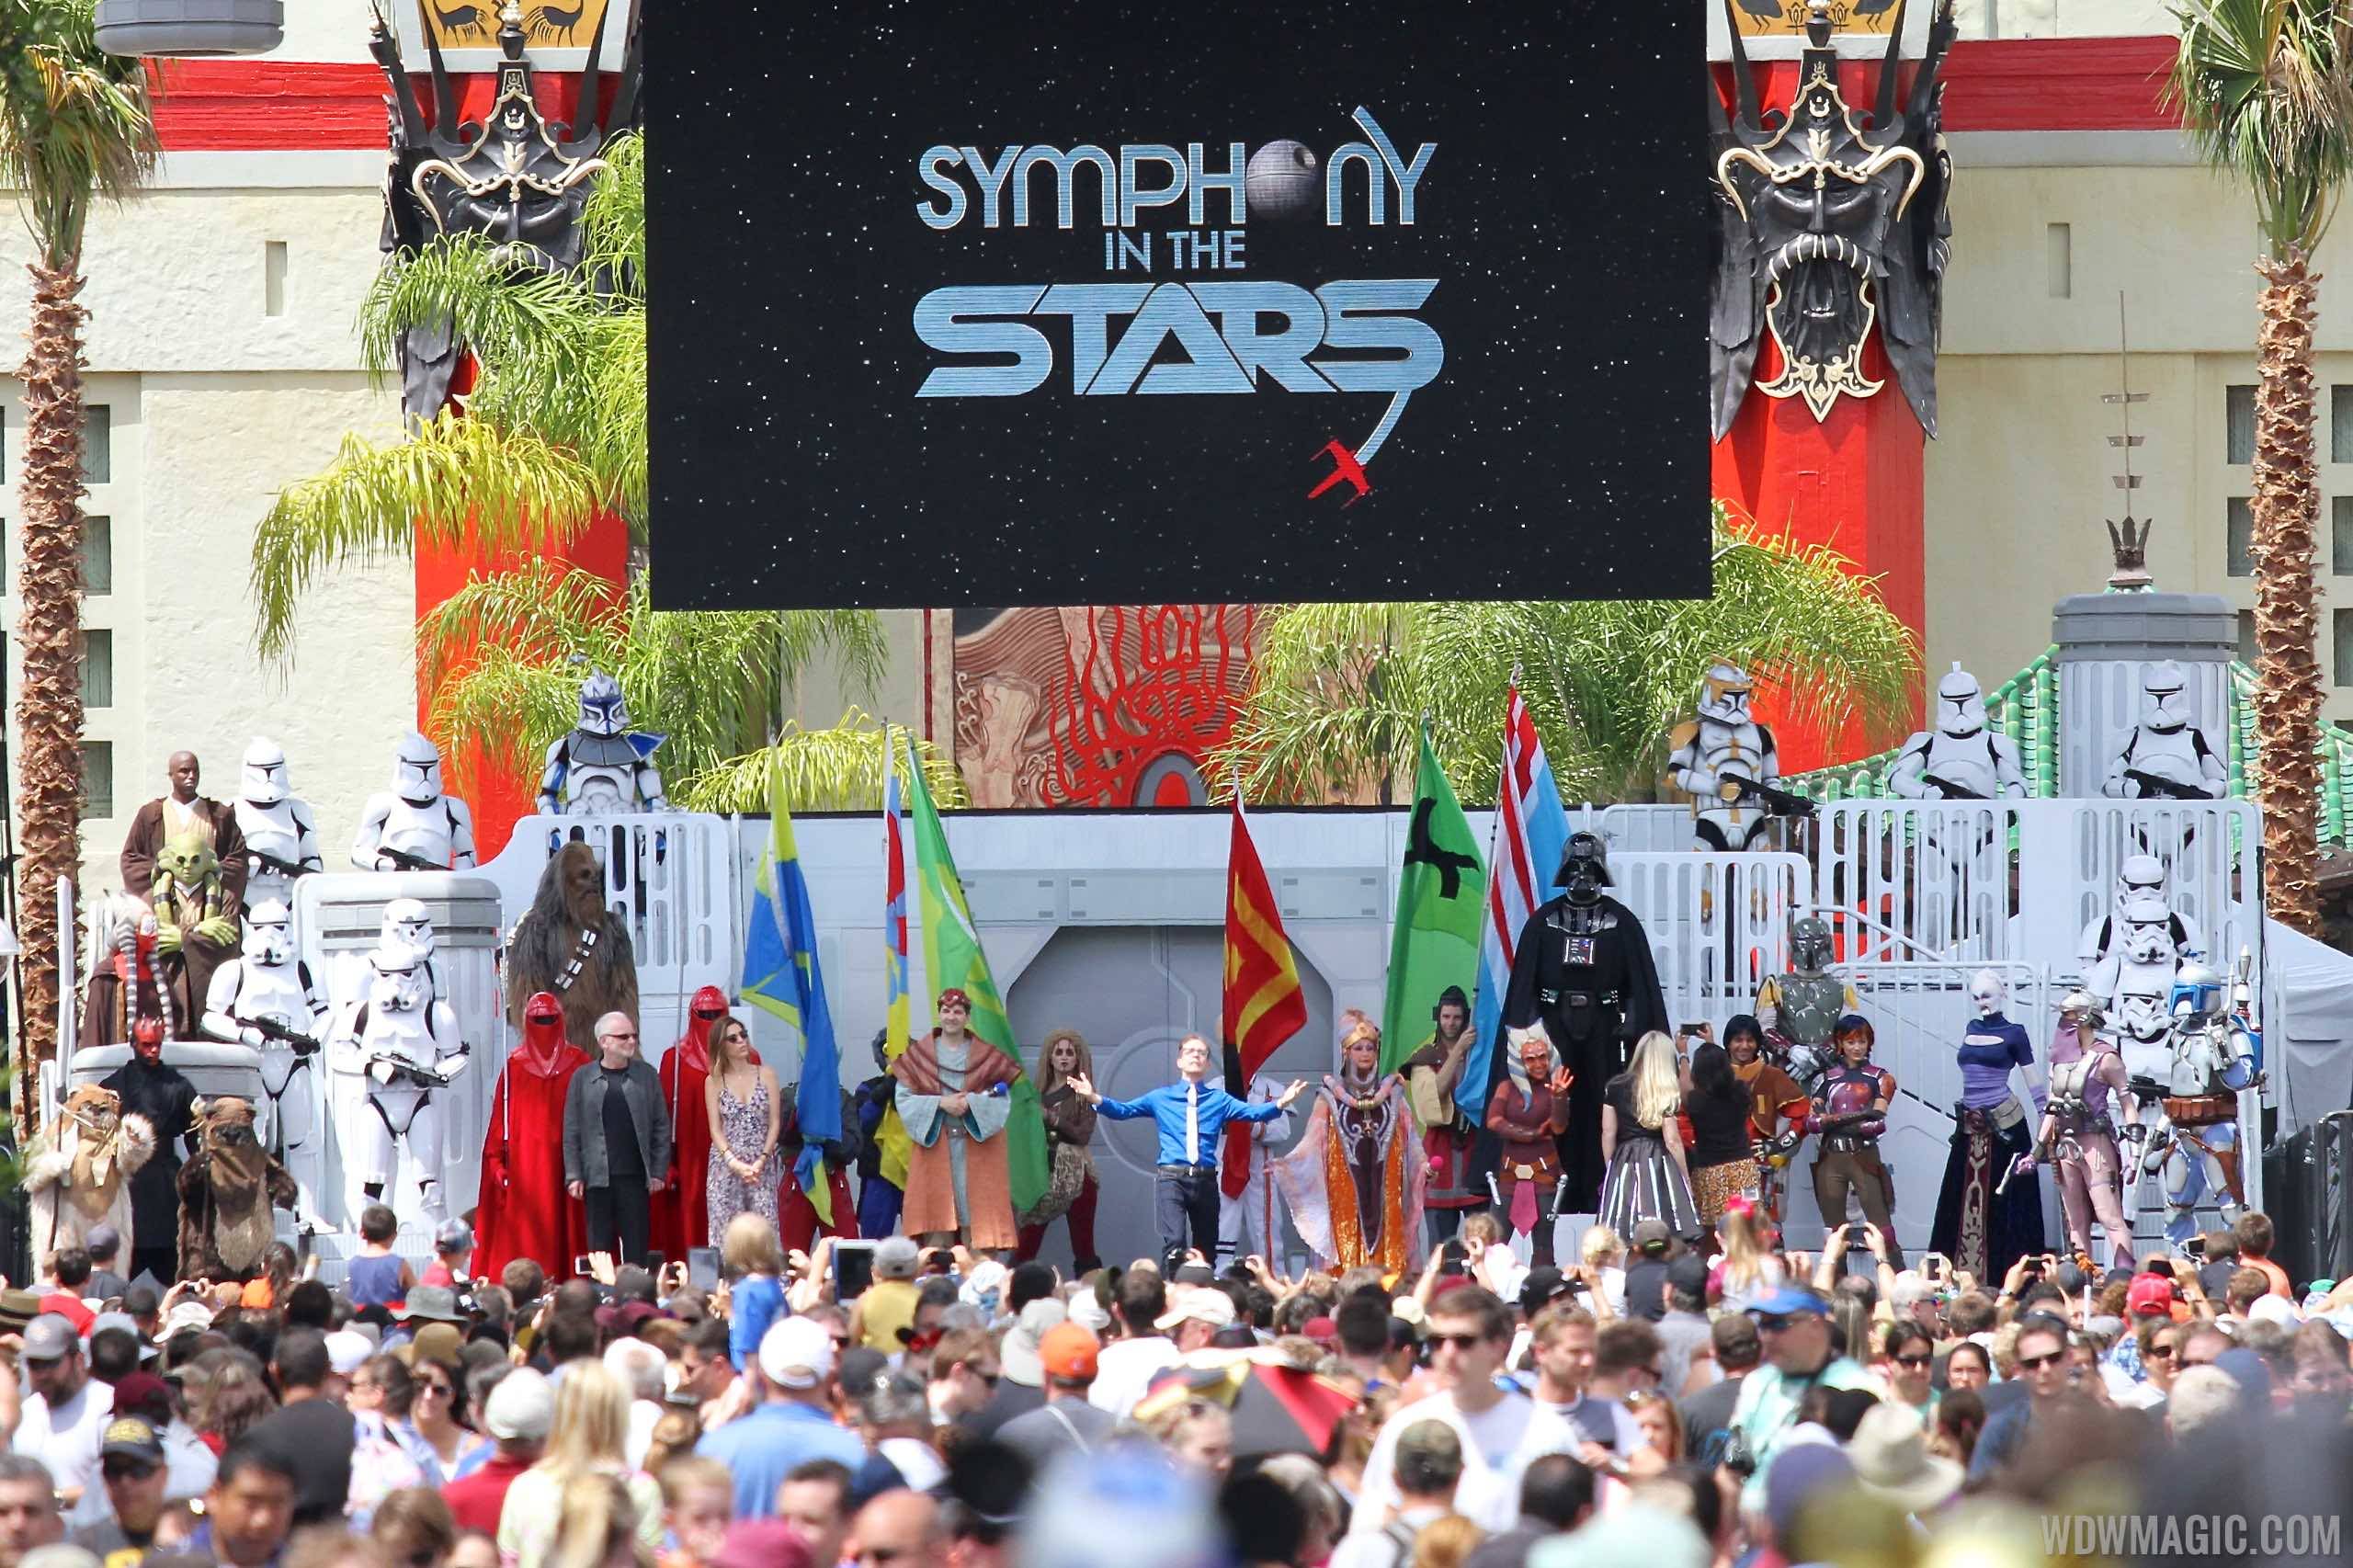 2015 Star Wars Weekends - Weekend 1 Legends of the Force motorcade celebrities - On Stage Welcome